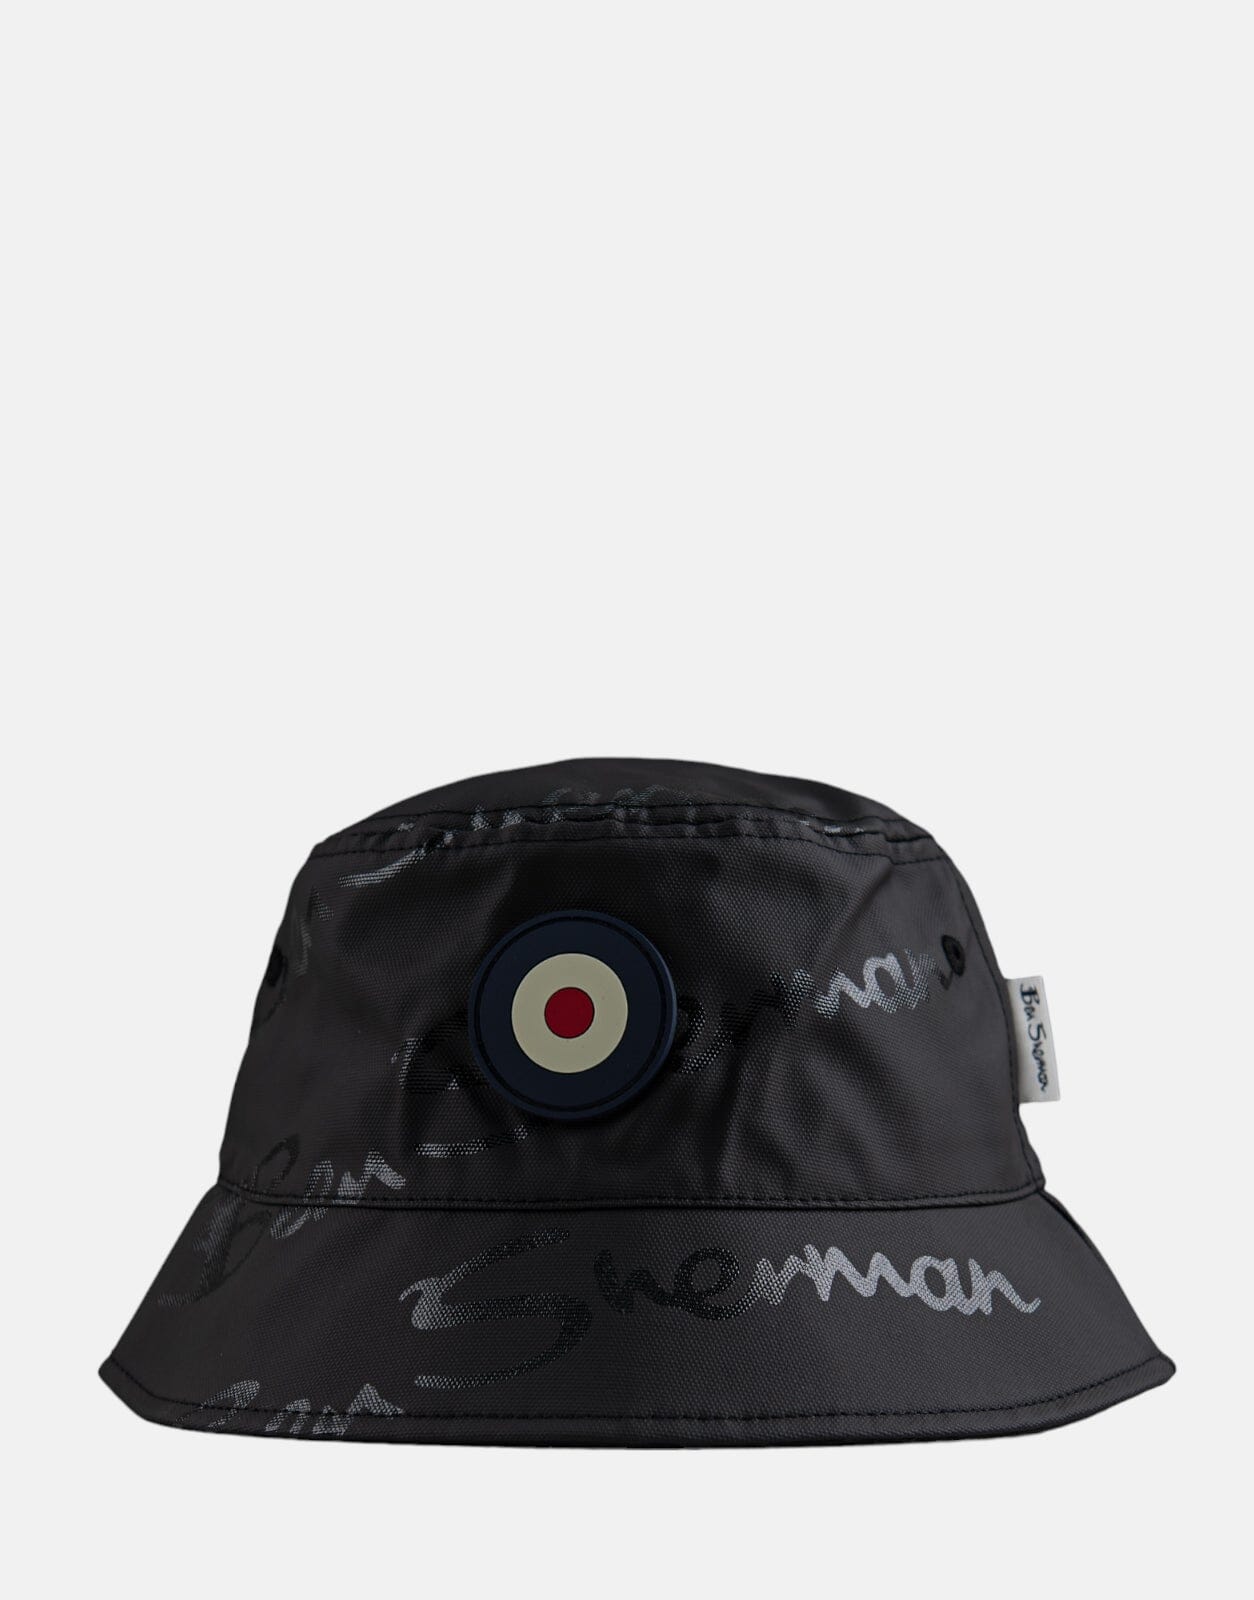 Ben Sherman Wax Target Bucket Hat Black - Subwear